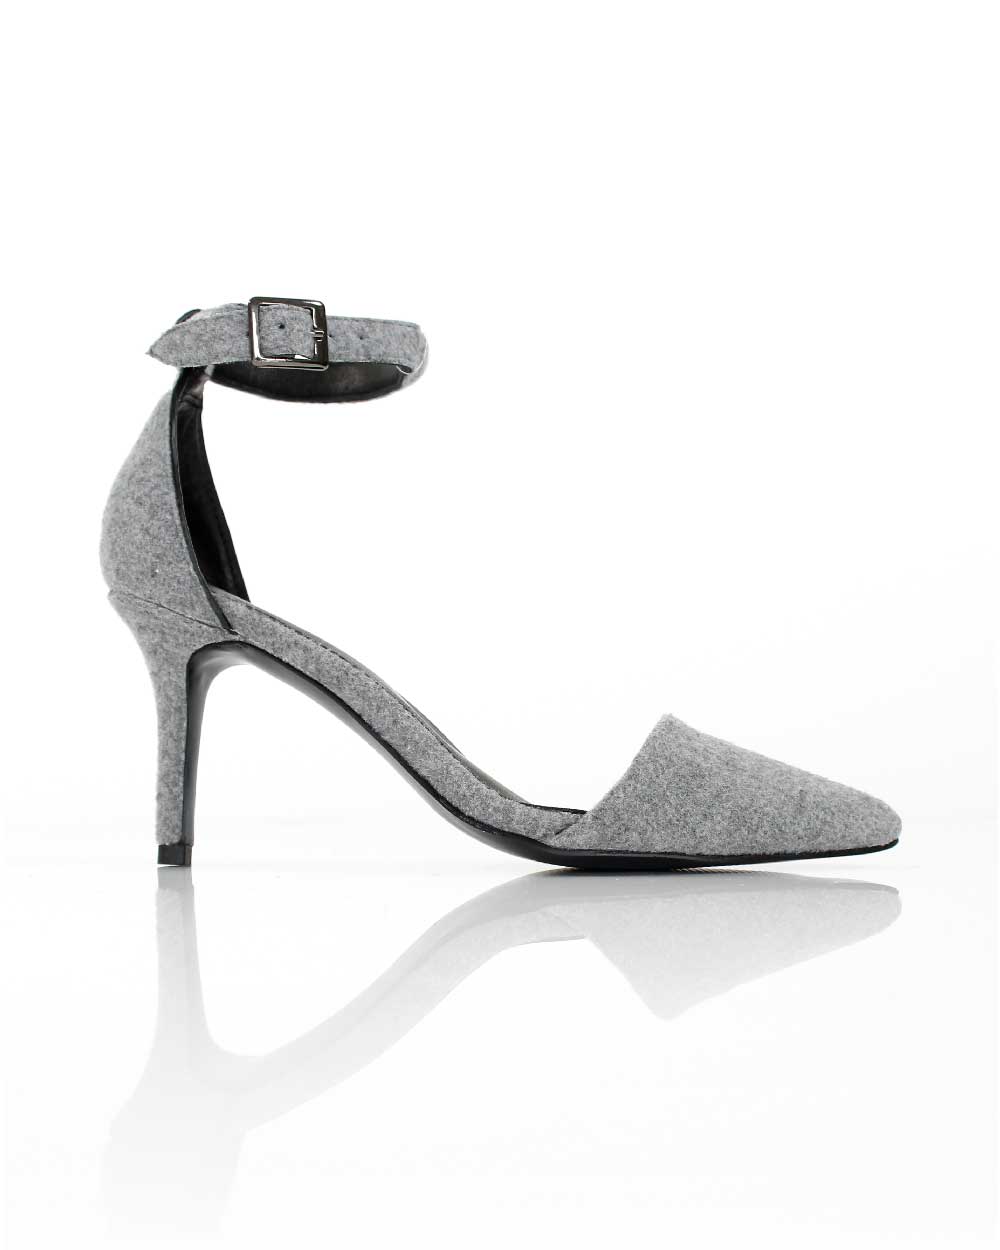 La Tribe heels, $330